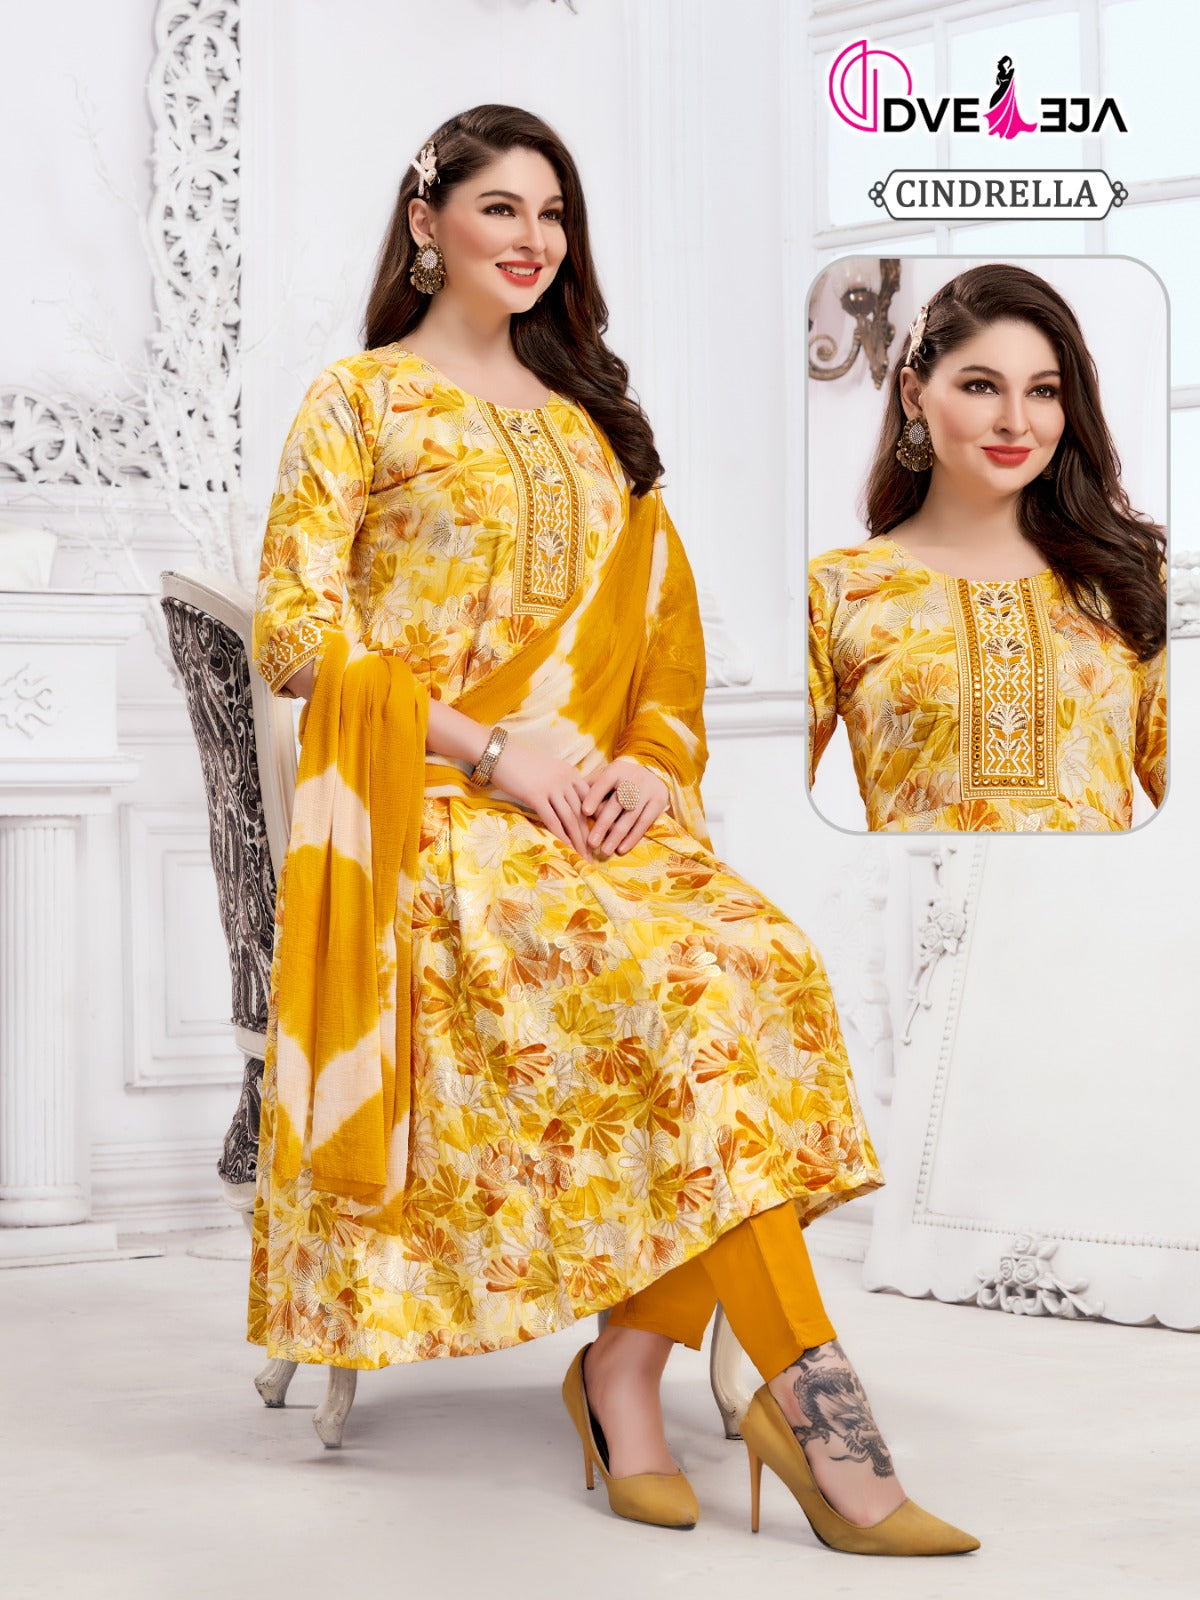 Cindrella - 2406 Dveeja Fashion Rayon Readymade Anarkali Suits Manufacturer Gujarat